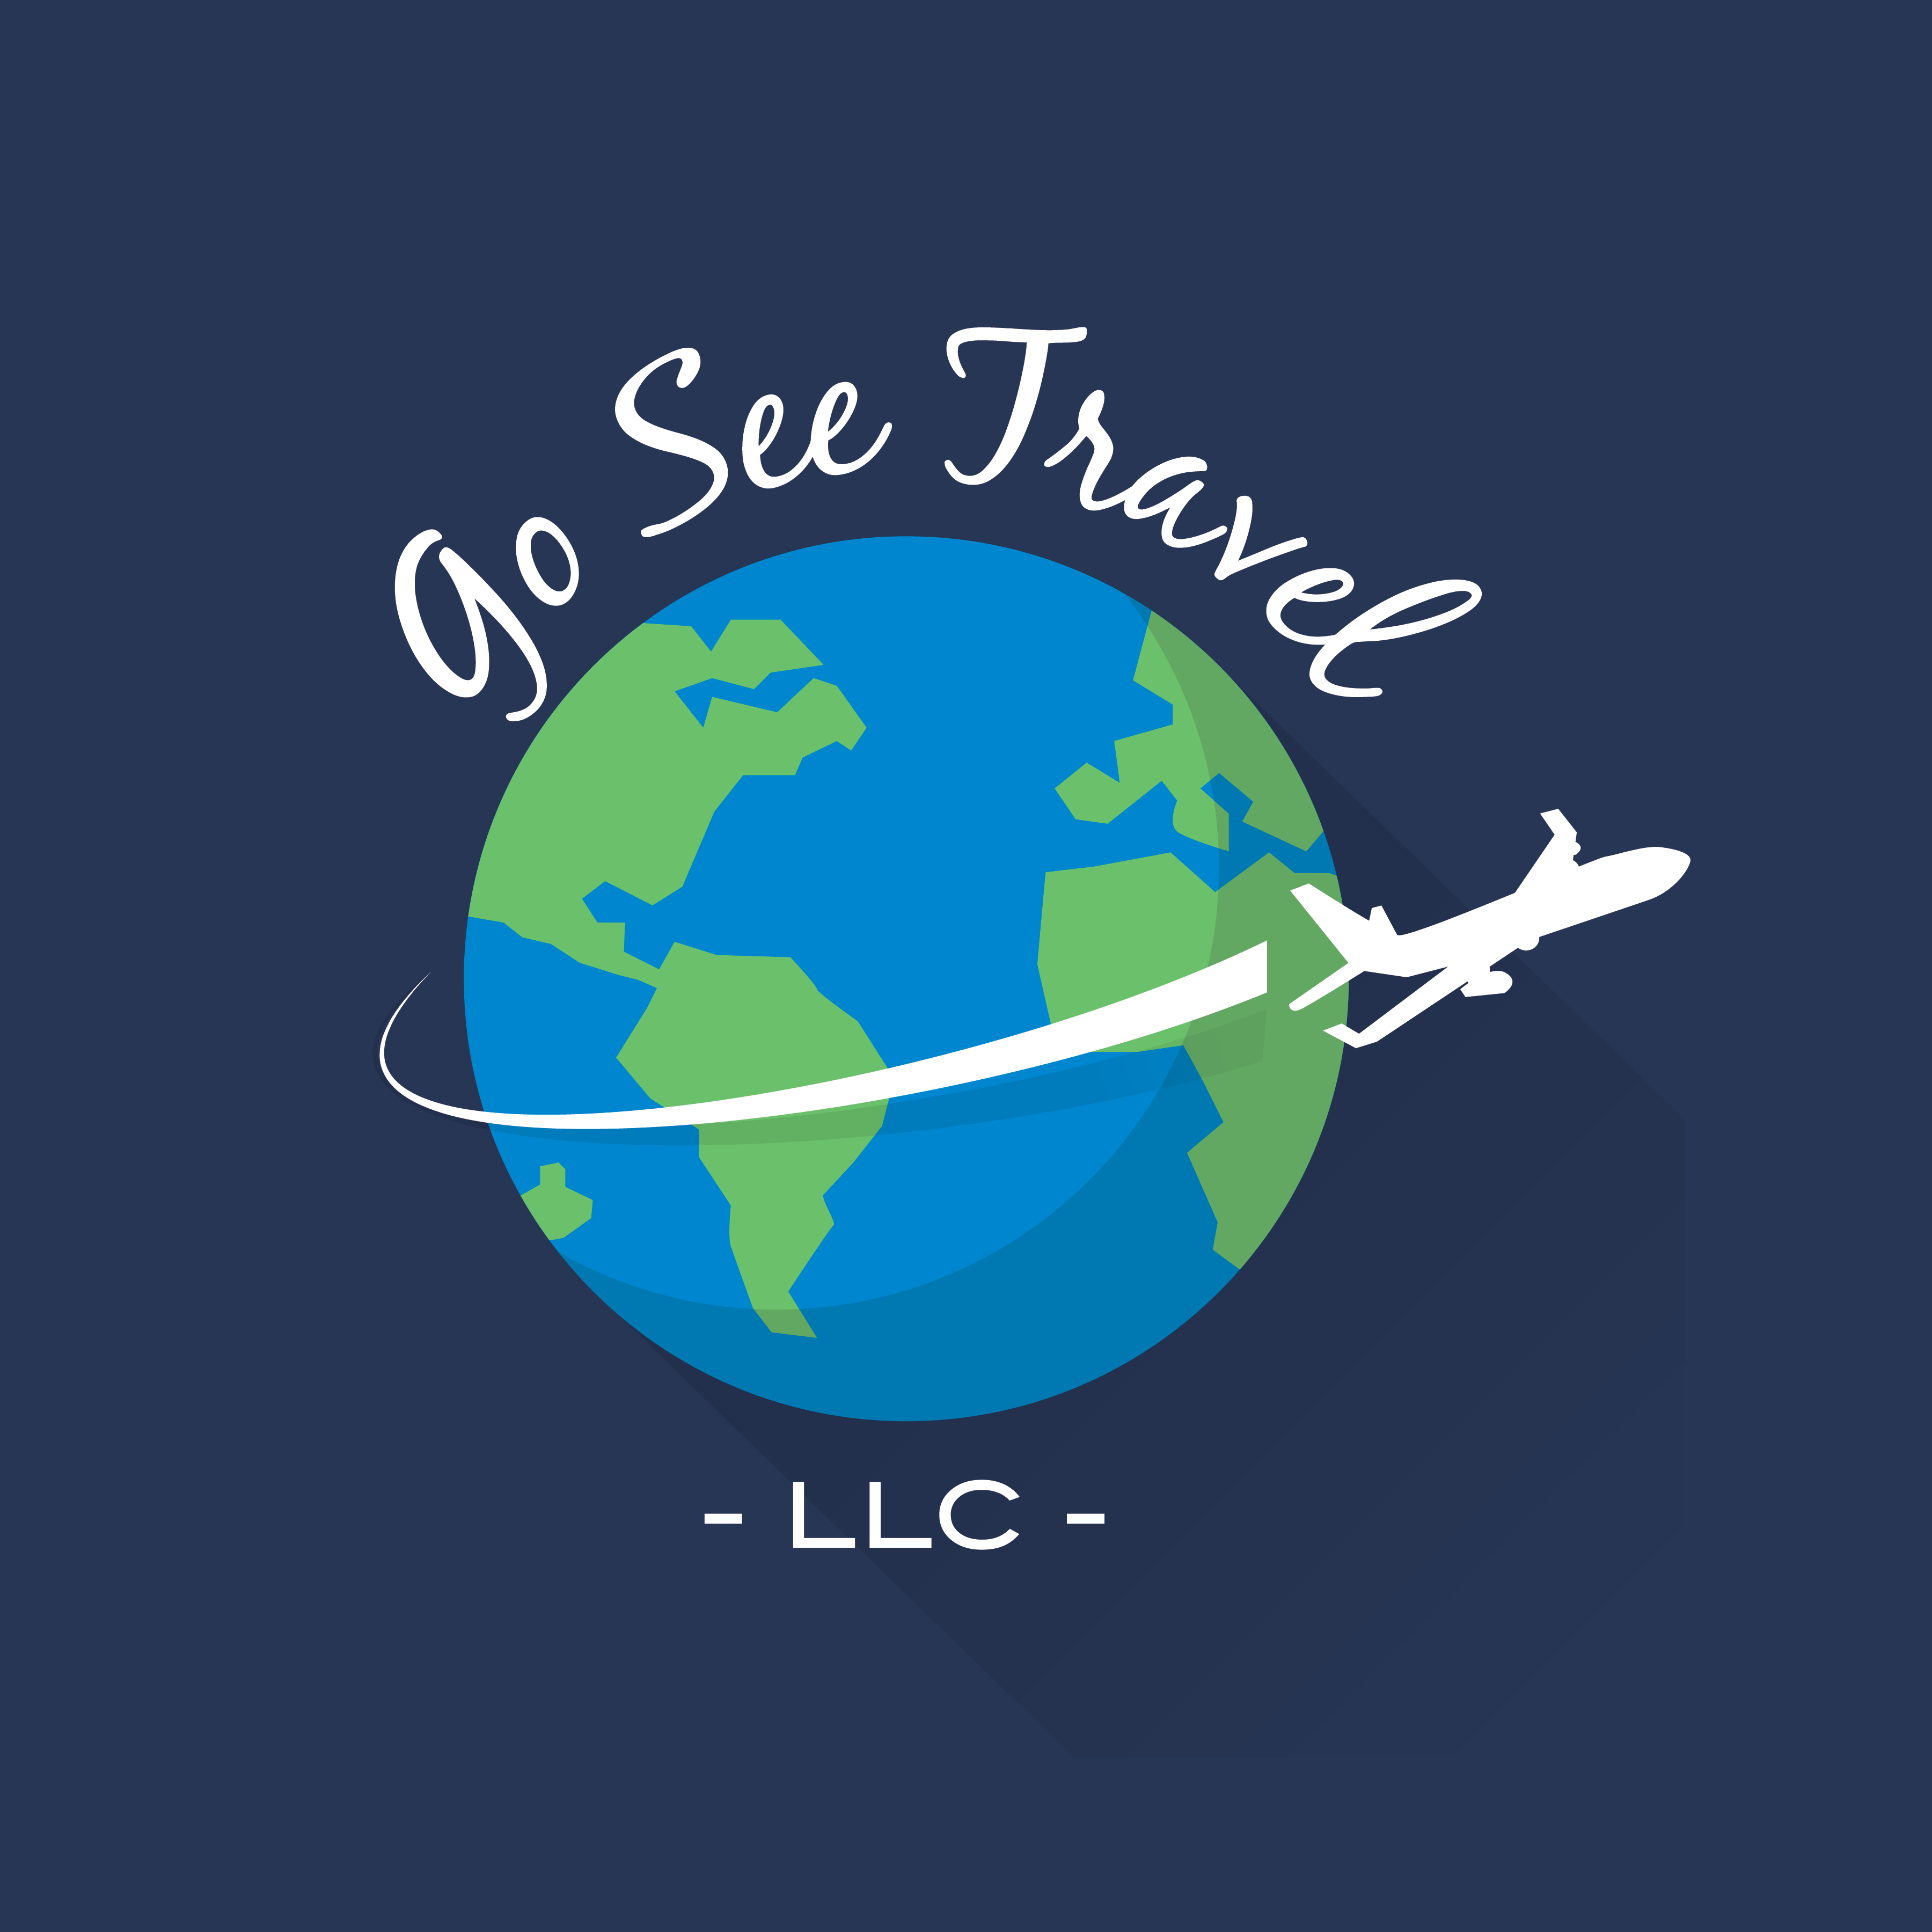 Go See Travel LLC